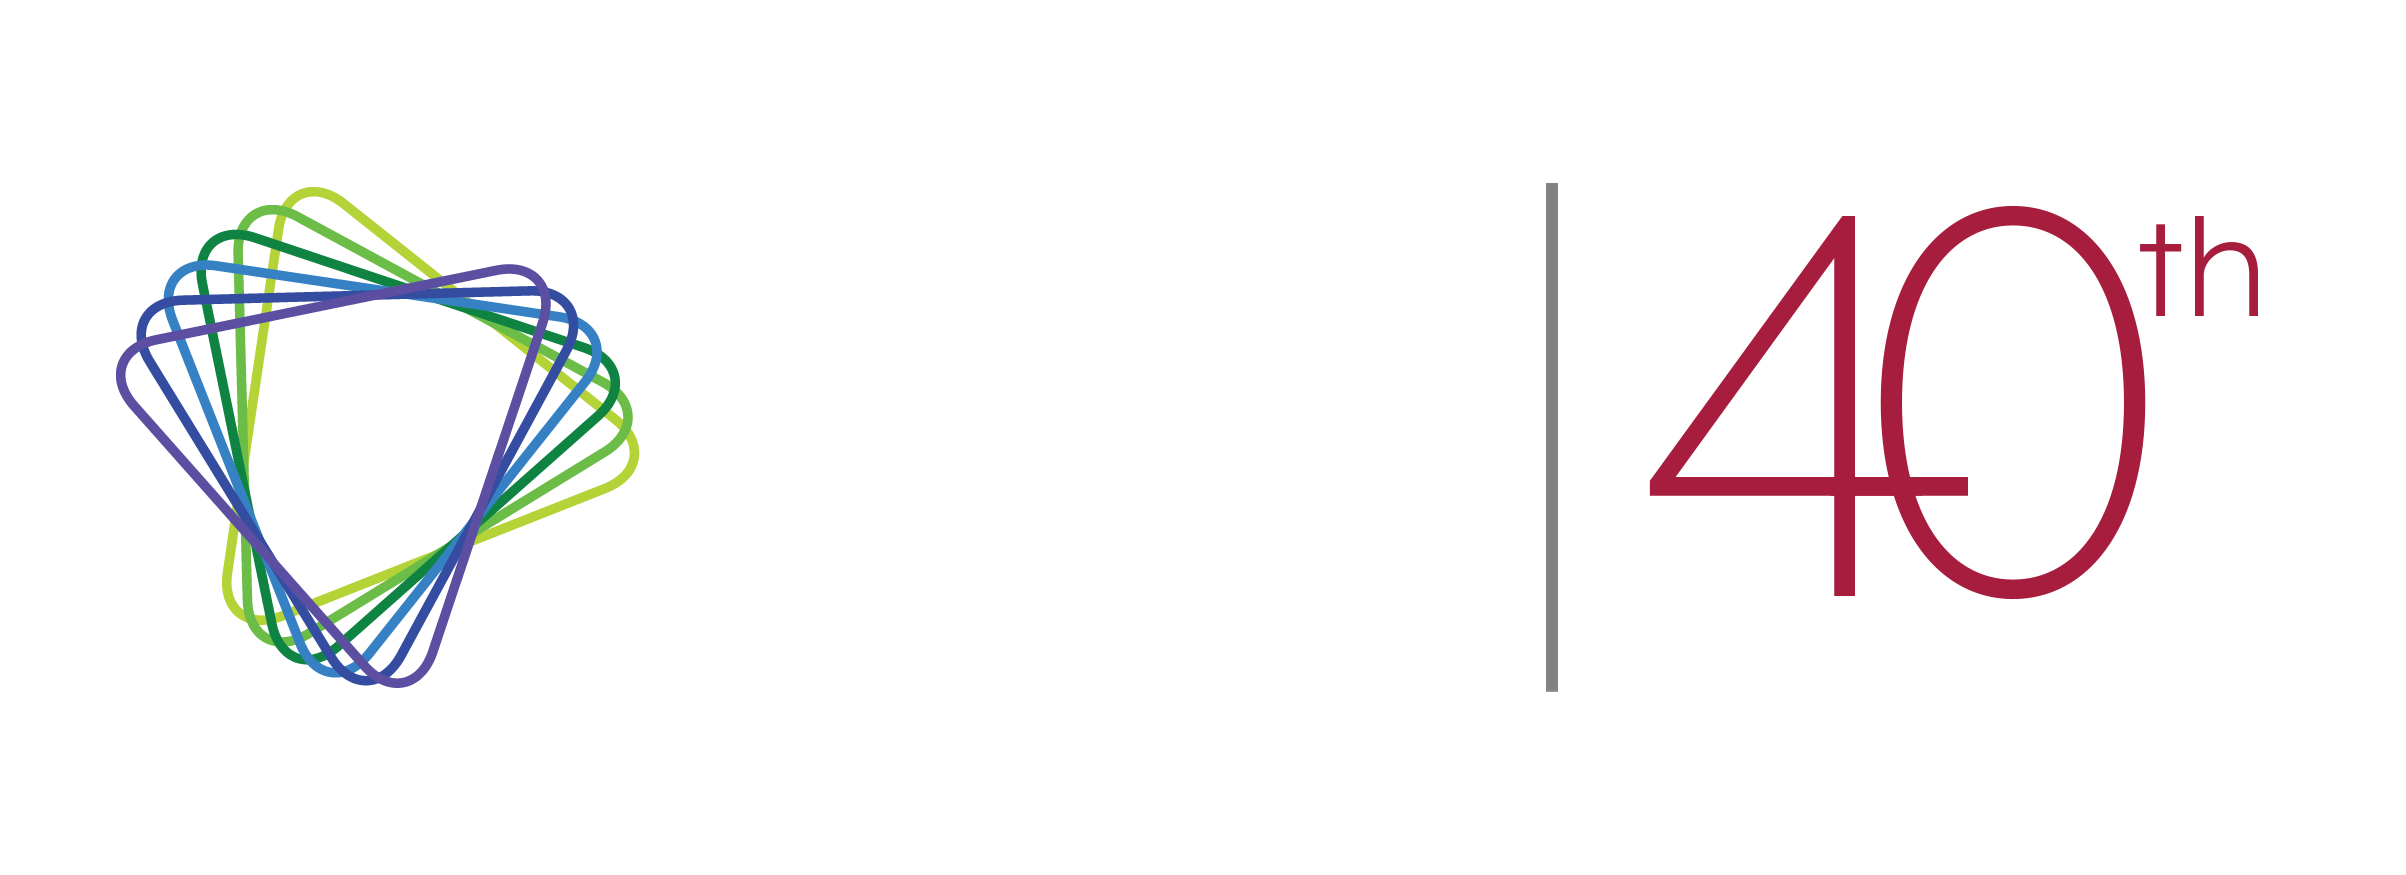 Society for Scholarly Publishing